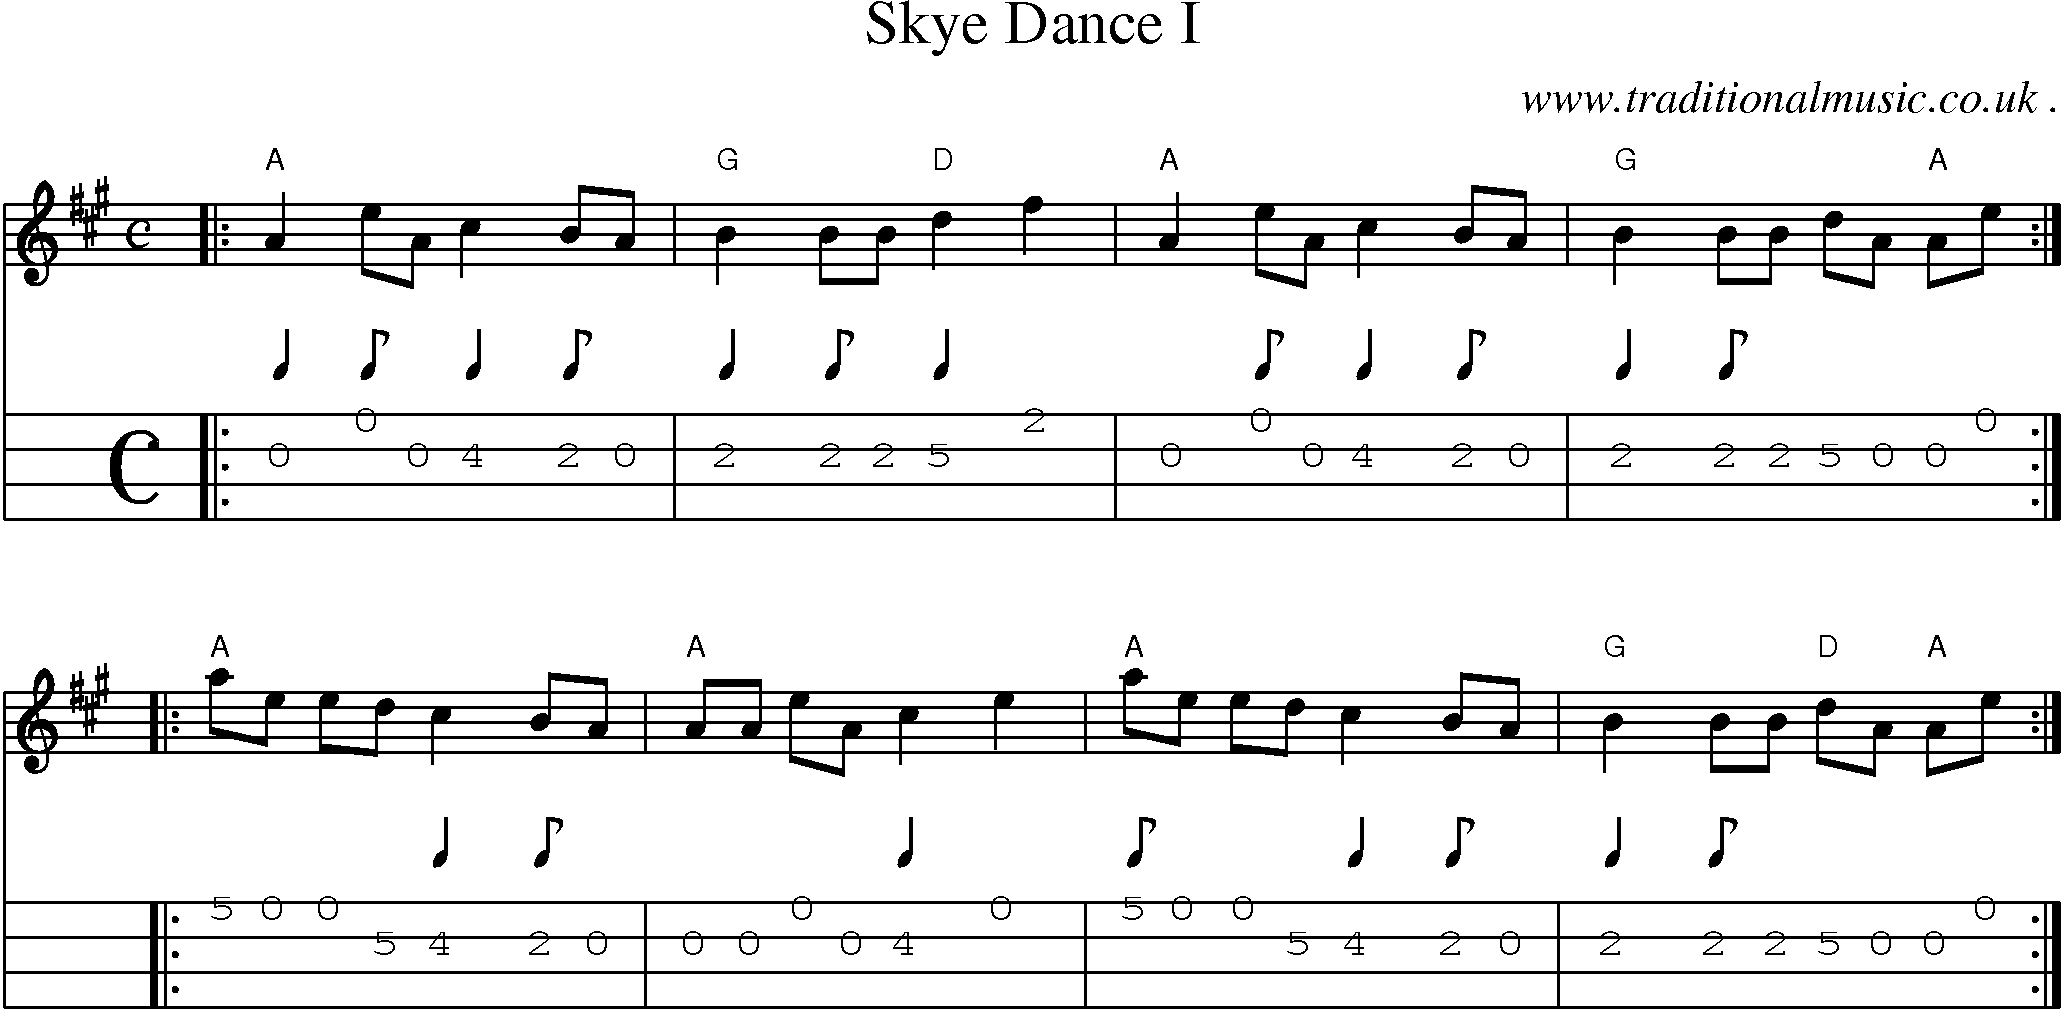 Sheet-music  score, Chords and Mandolin Tabs for Skye Dance I